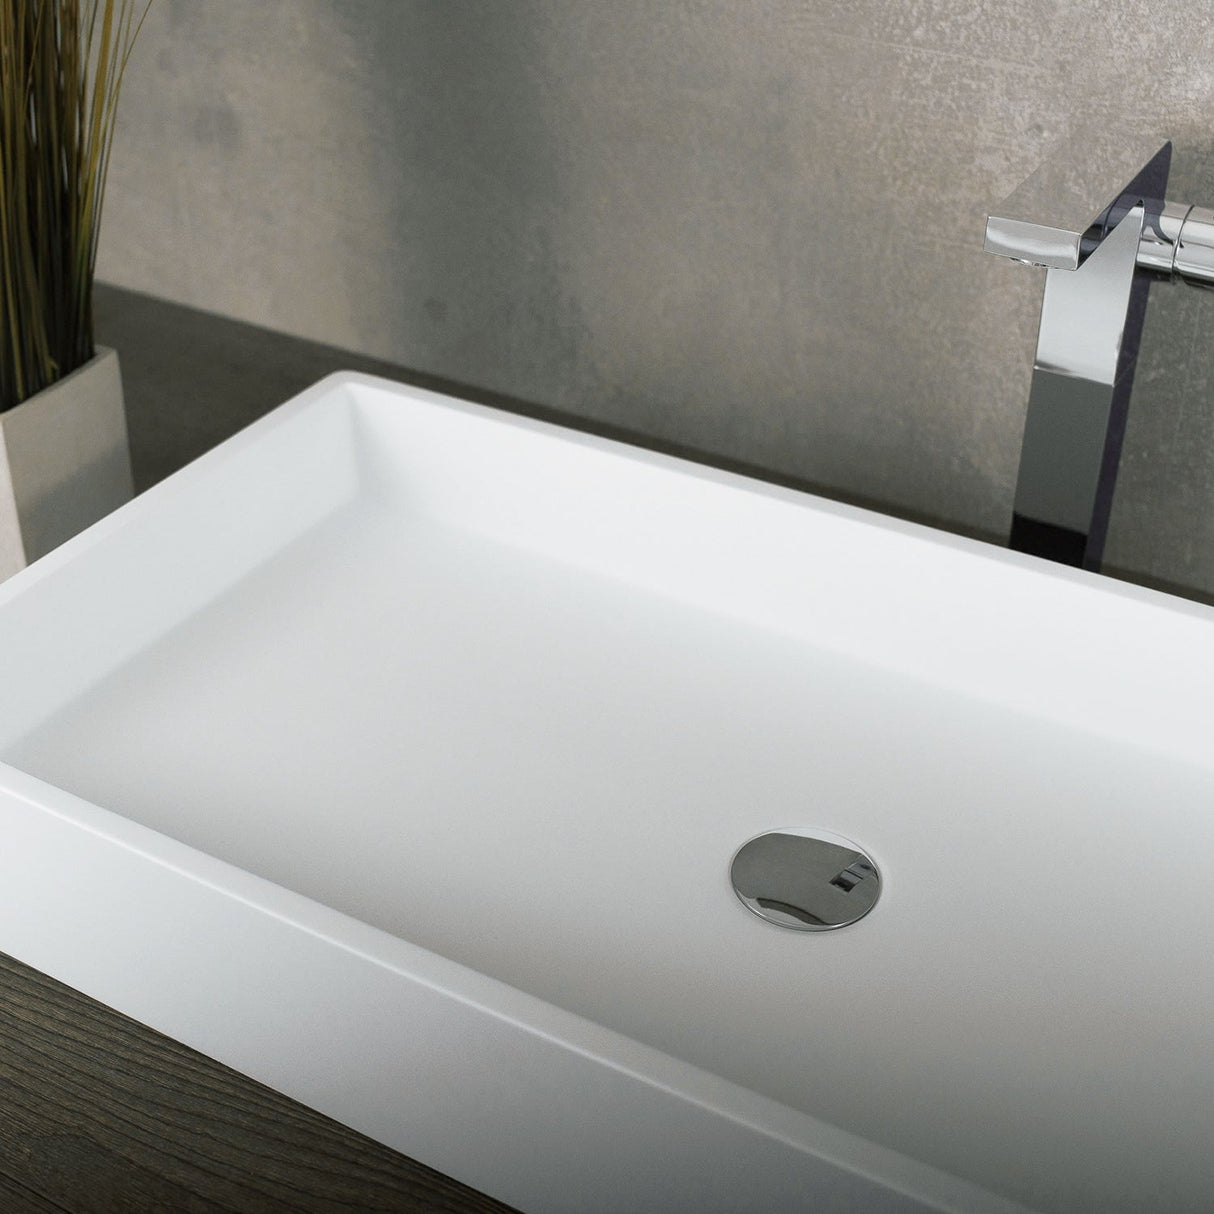 DAX Solid Surface Rectangular Single Bowl Vessel Bathroom Basin, Matte White DAX-AB-1327